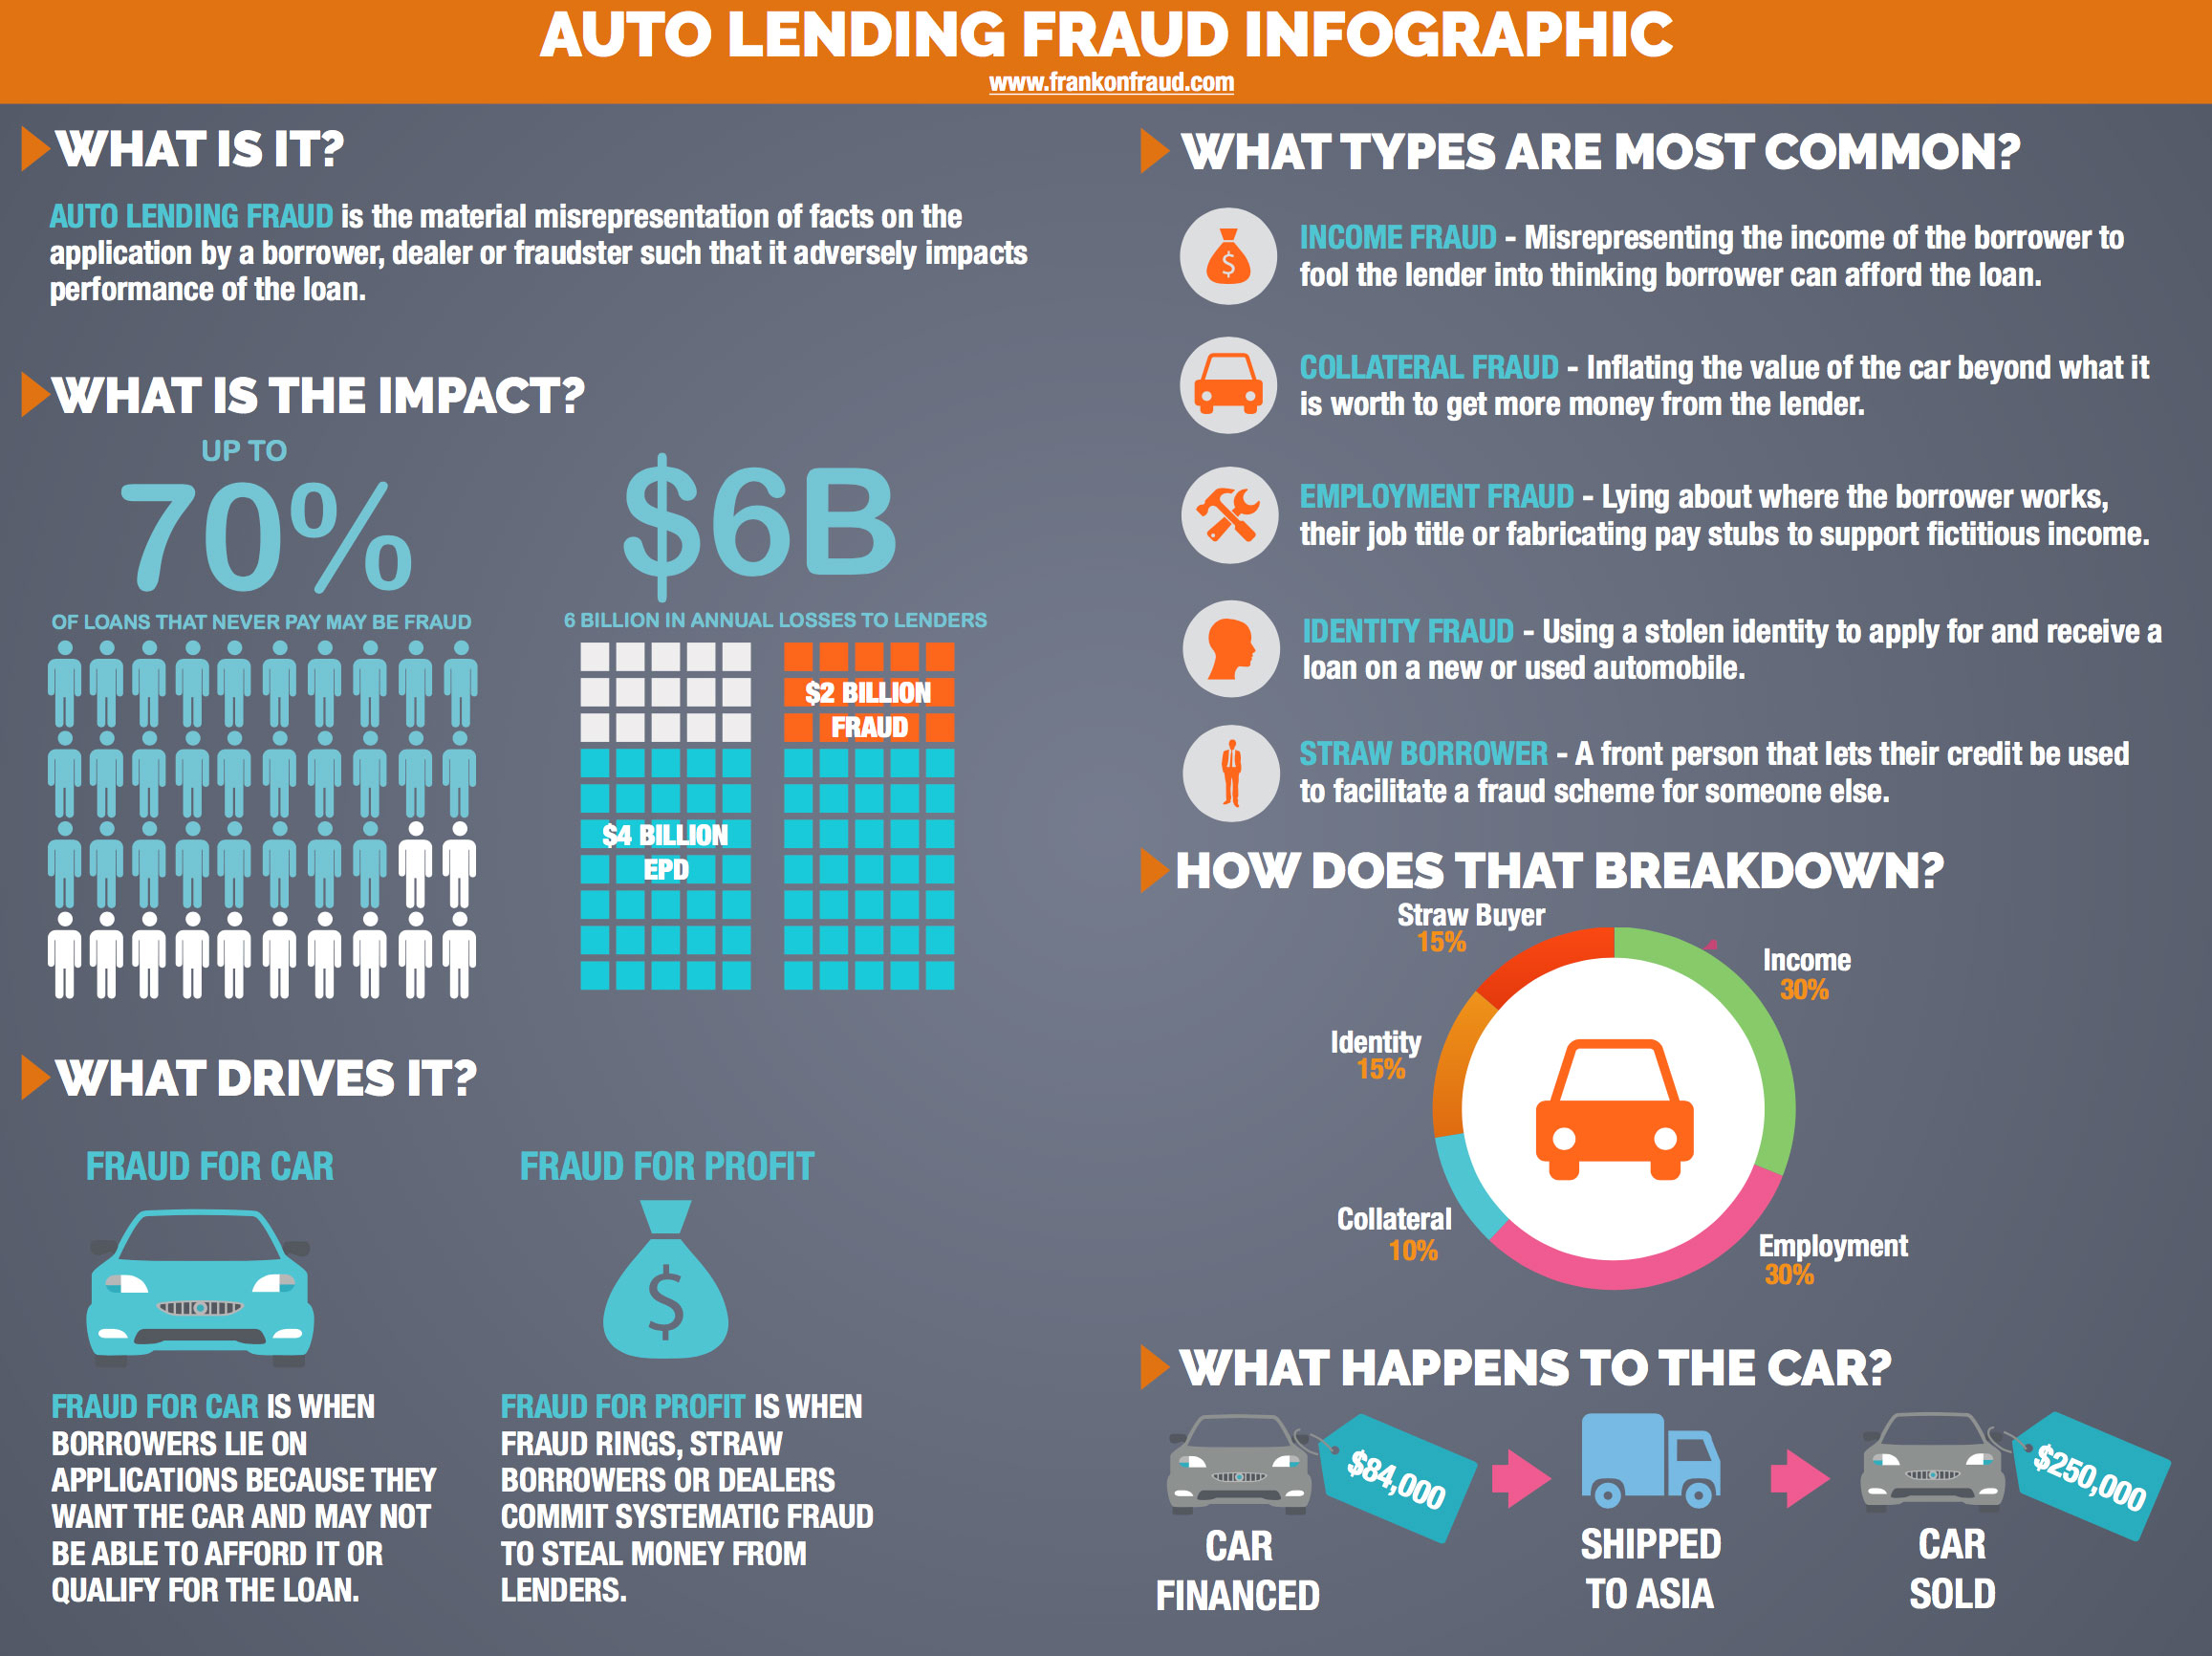 Auto Lending Fraud Infographic Frank on Fraud